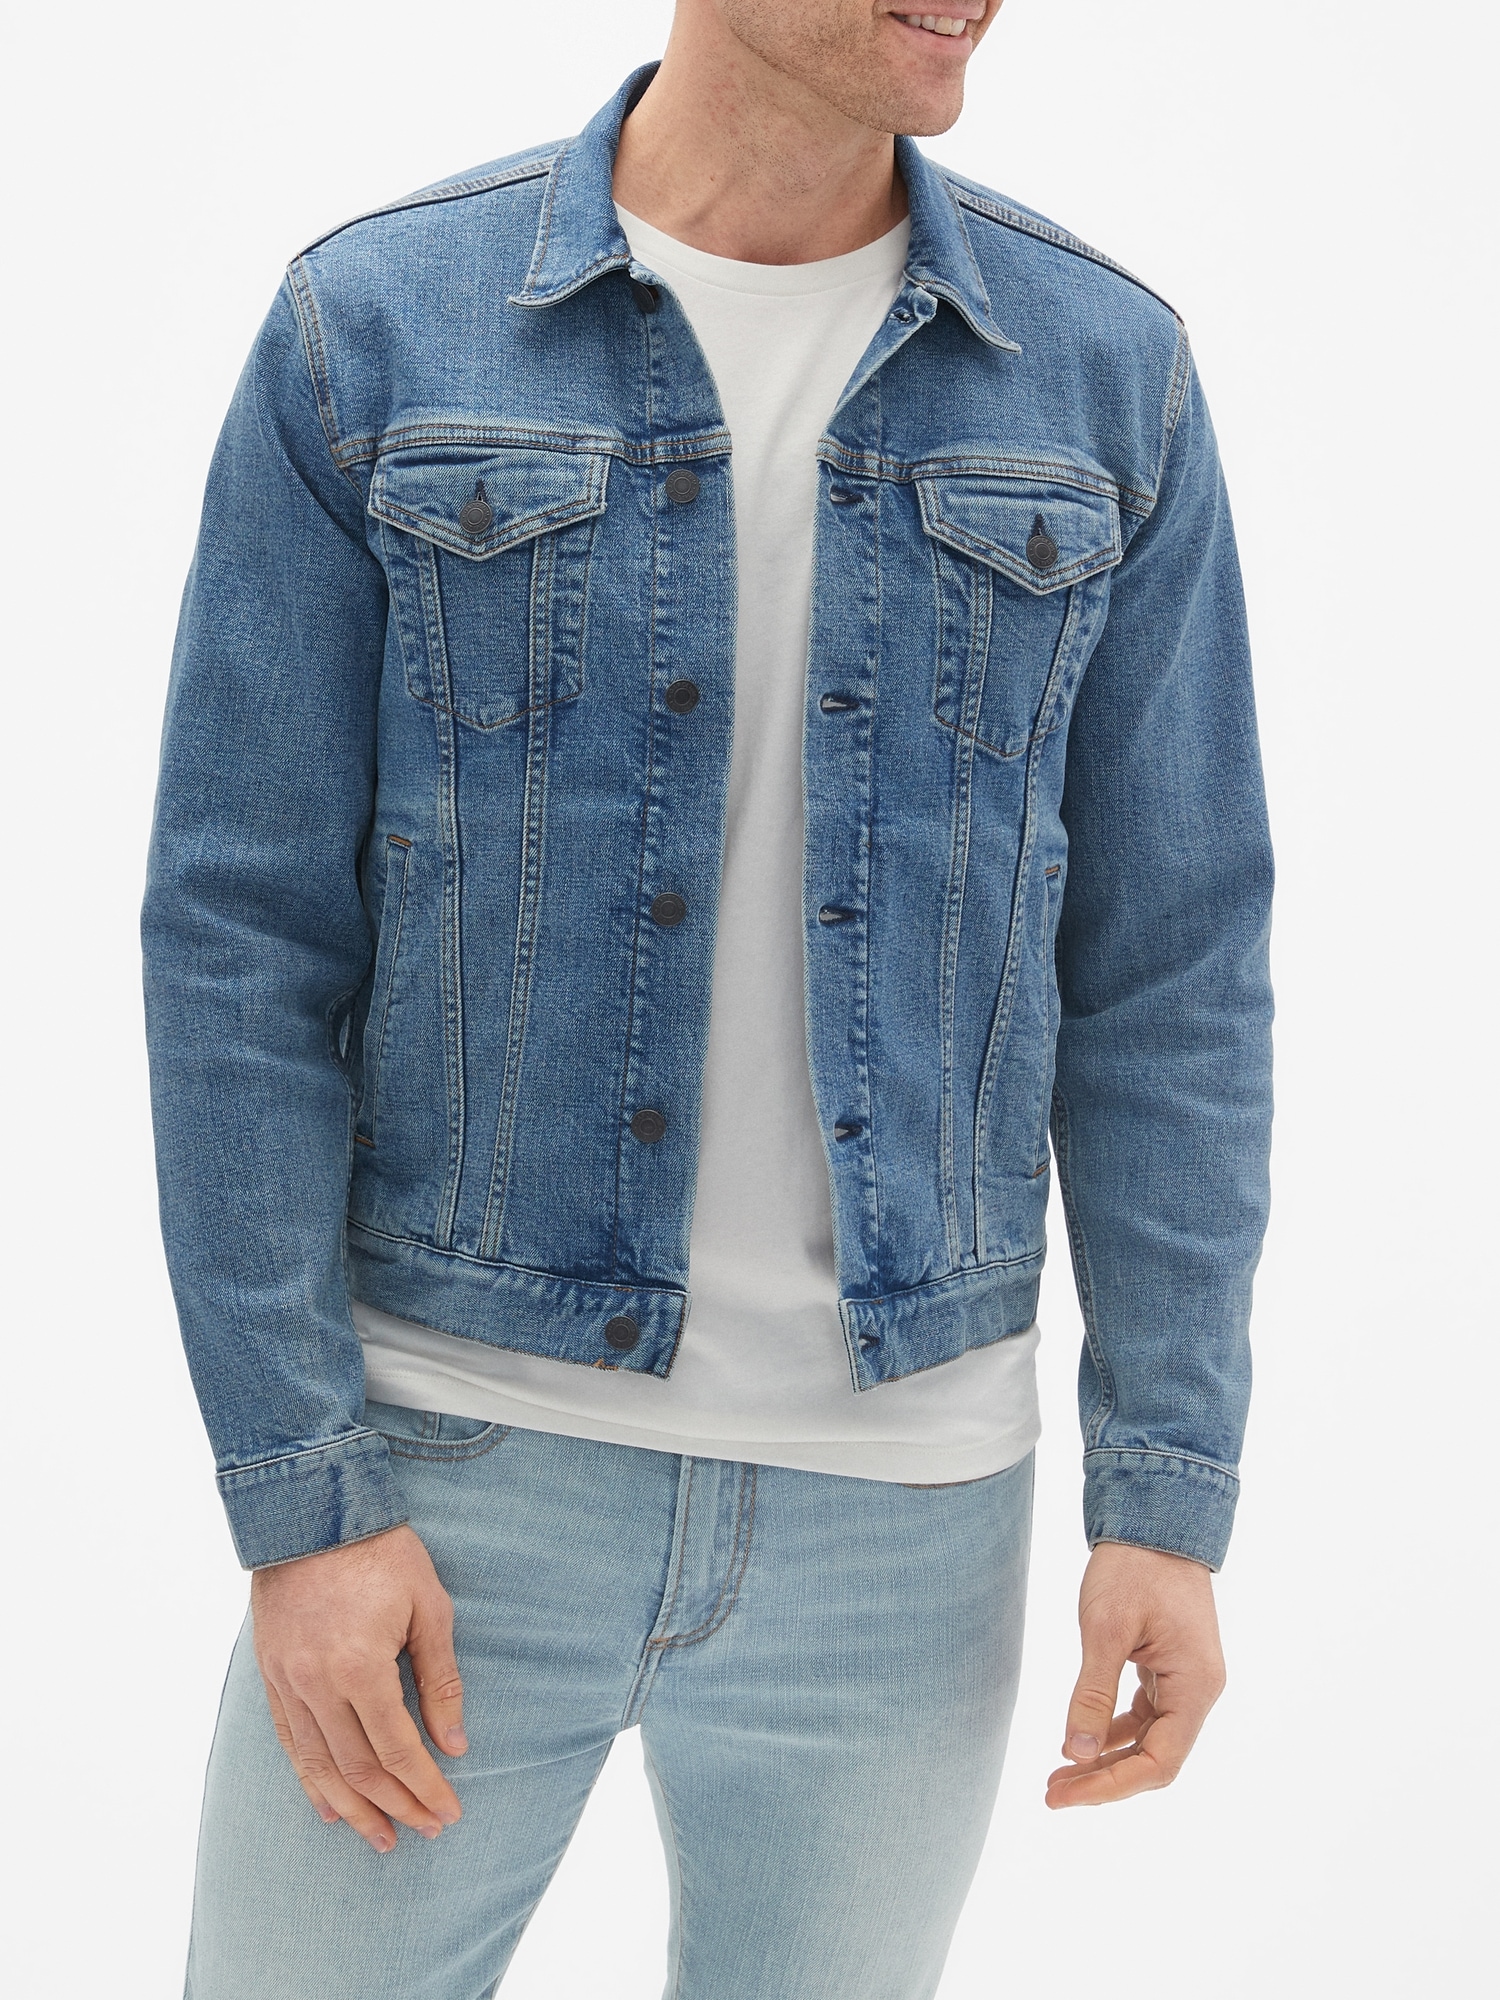 denim jacket with jeans